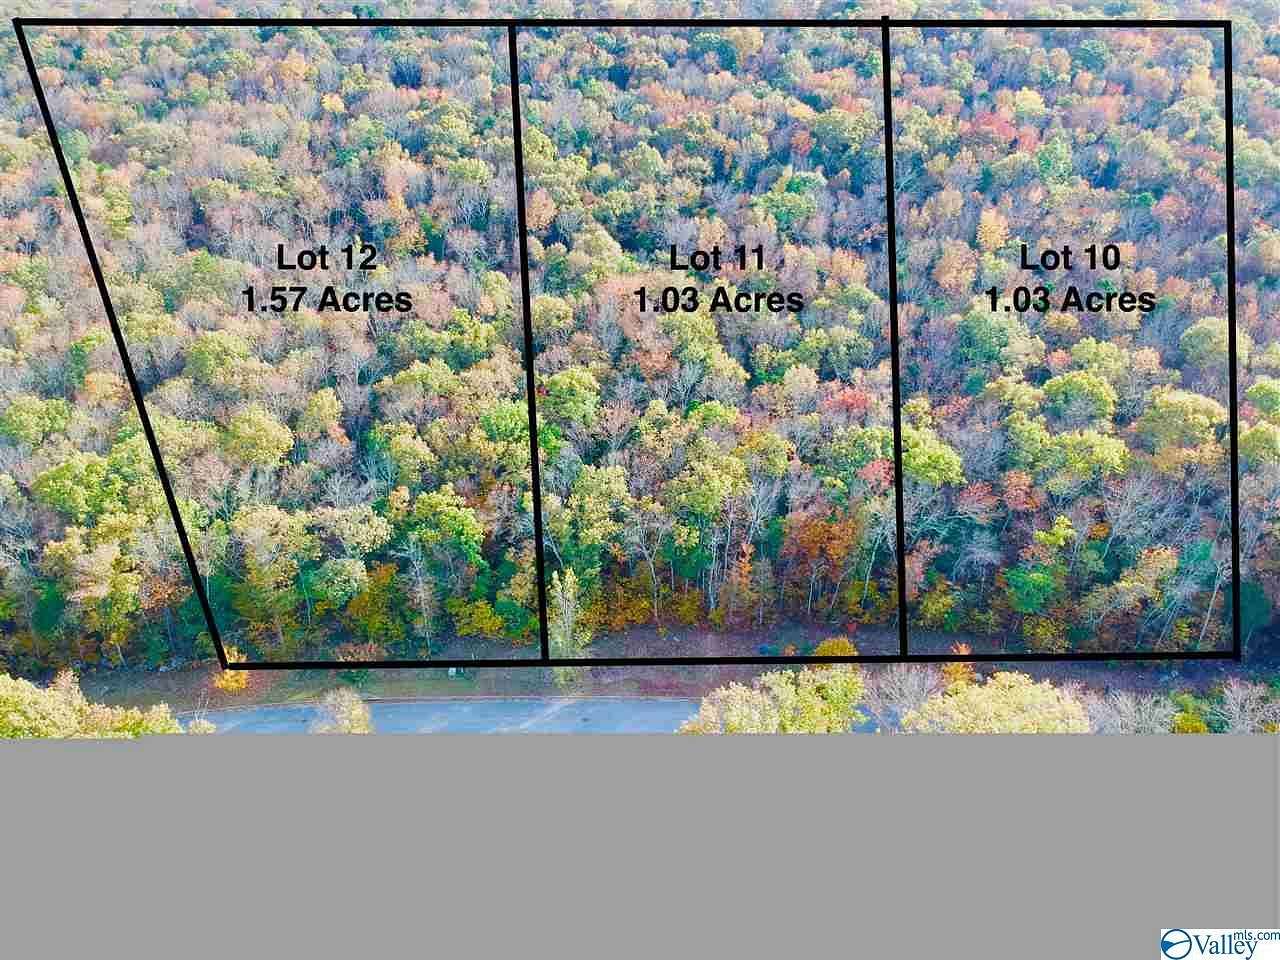 1 Acre of Land for Sale in Huntsville, Alabama